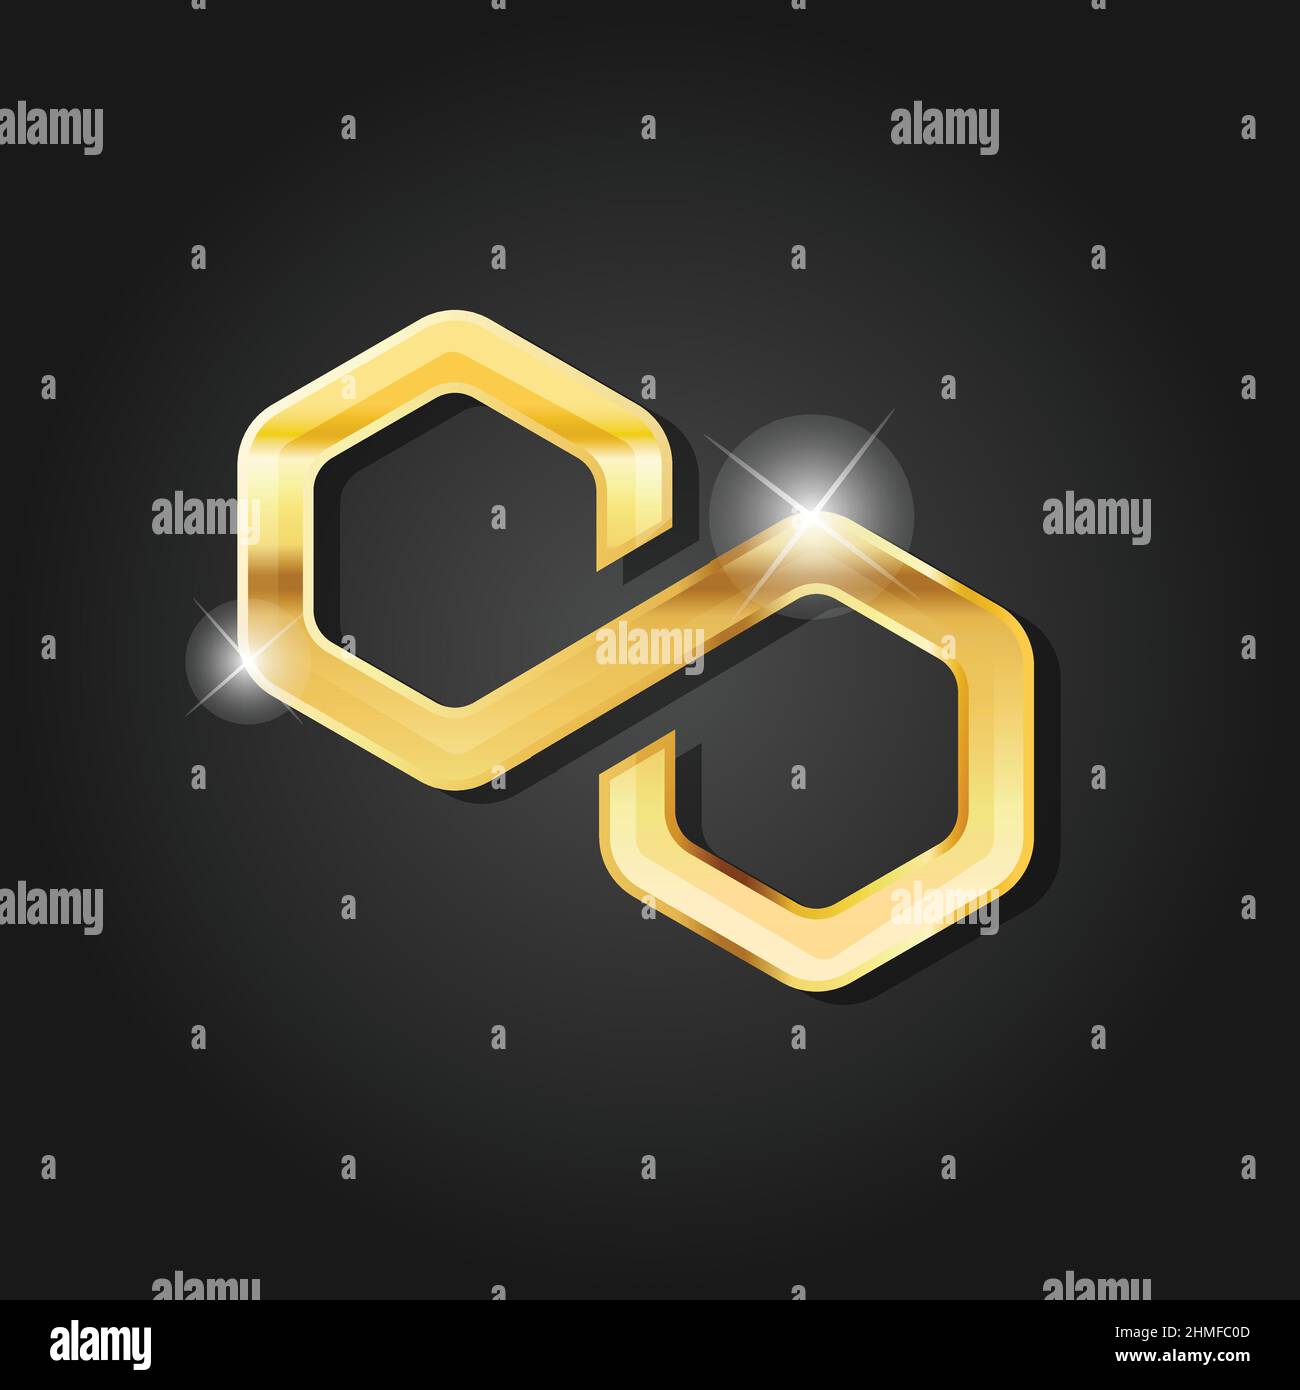 Golden shiny polygon icon badge symbol vector image. Golden digital cryptocurrency coin. Electronics finance money symbol. Stock Vector